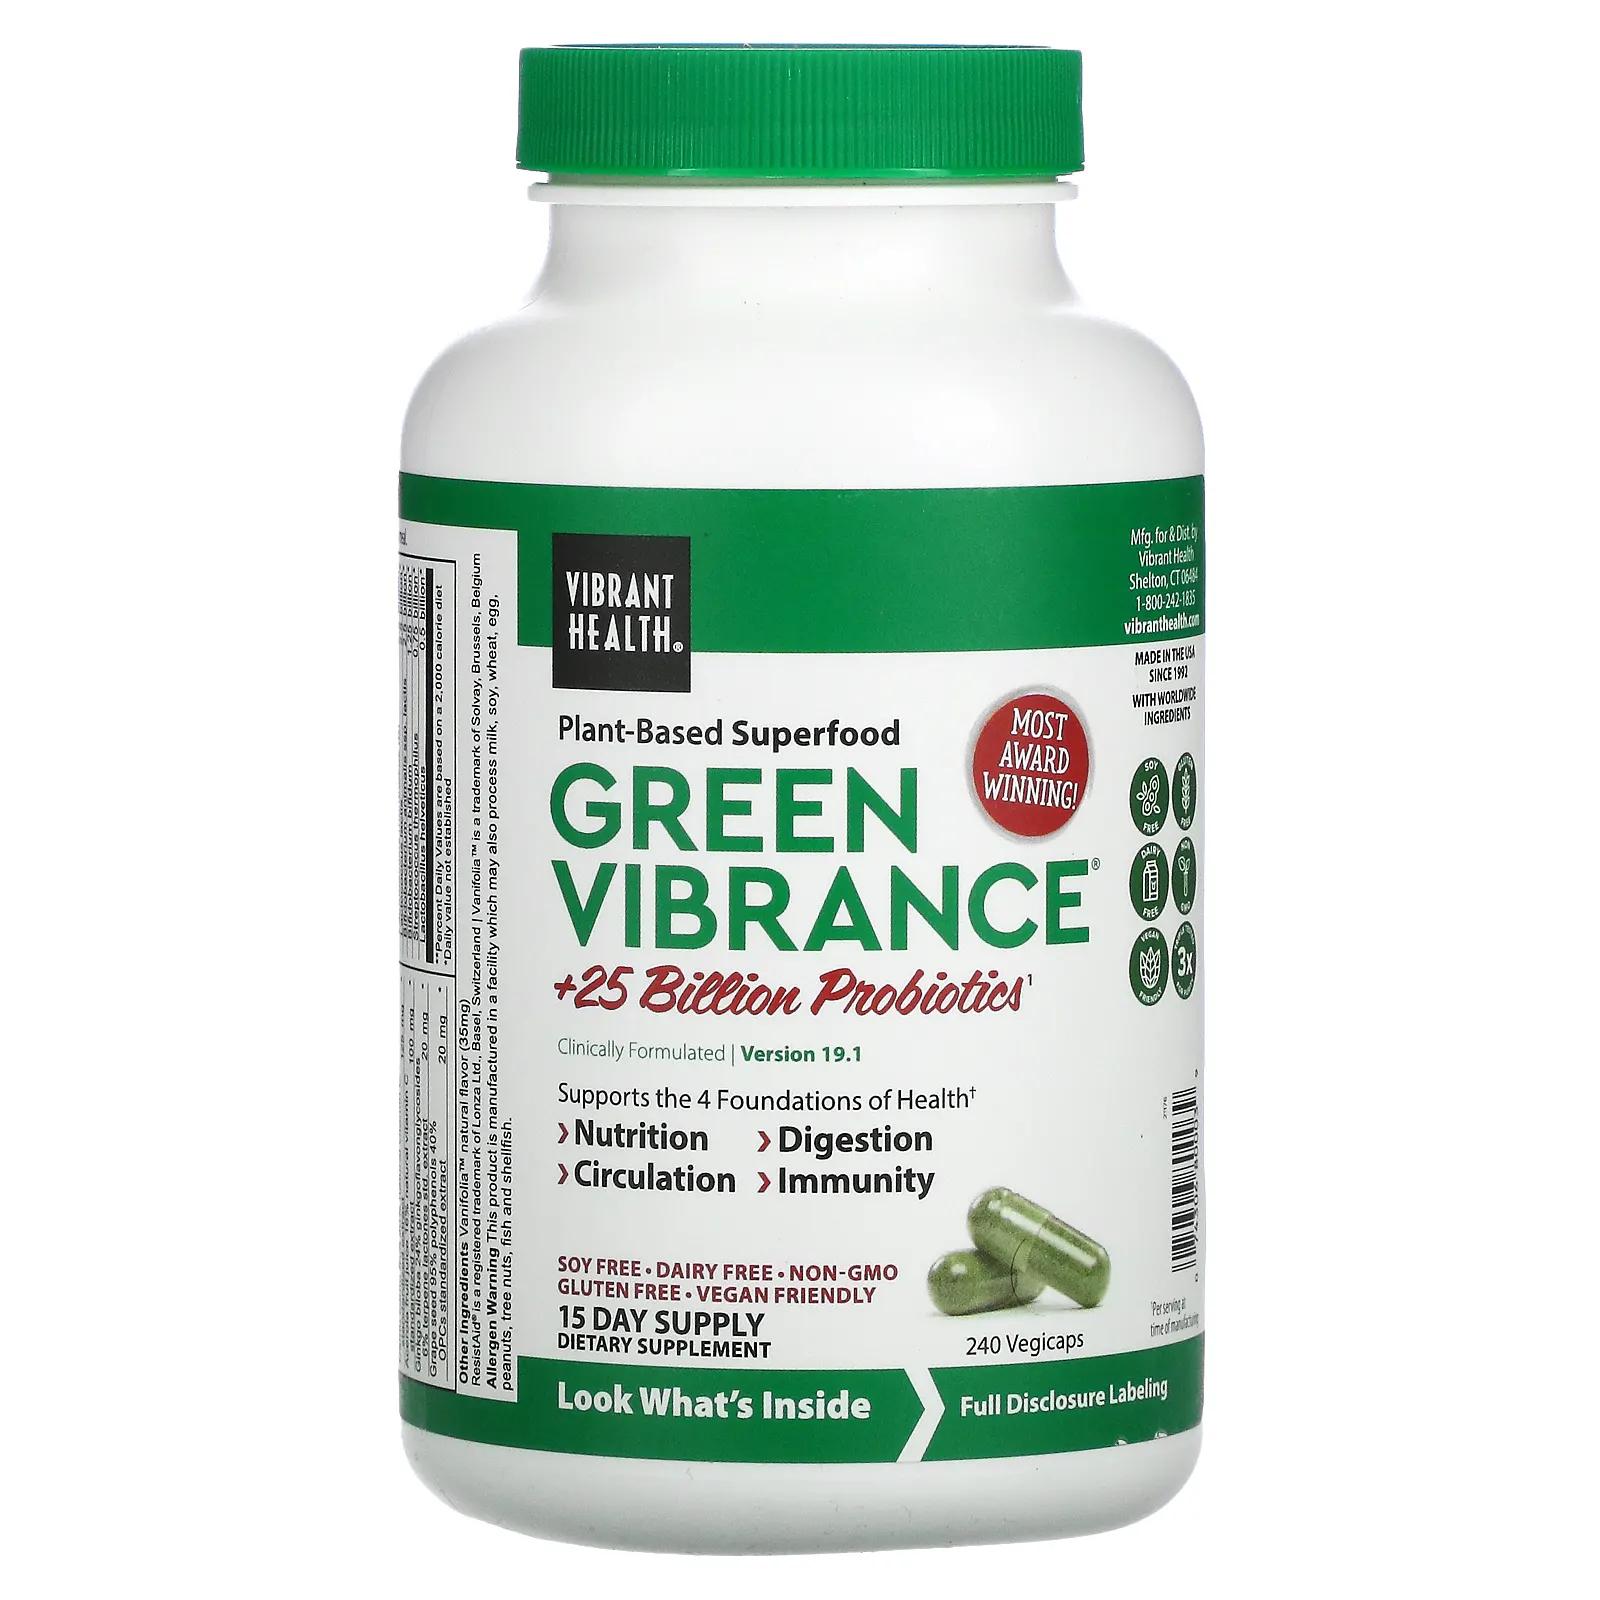 Vibrant Health Green Vibrance версия 17.0 240 капсул в растительной оболочке vibrant health green vibrance 25 млрд пробиотиков версия 17 0 35 27 унц 1 кг